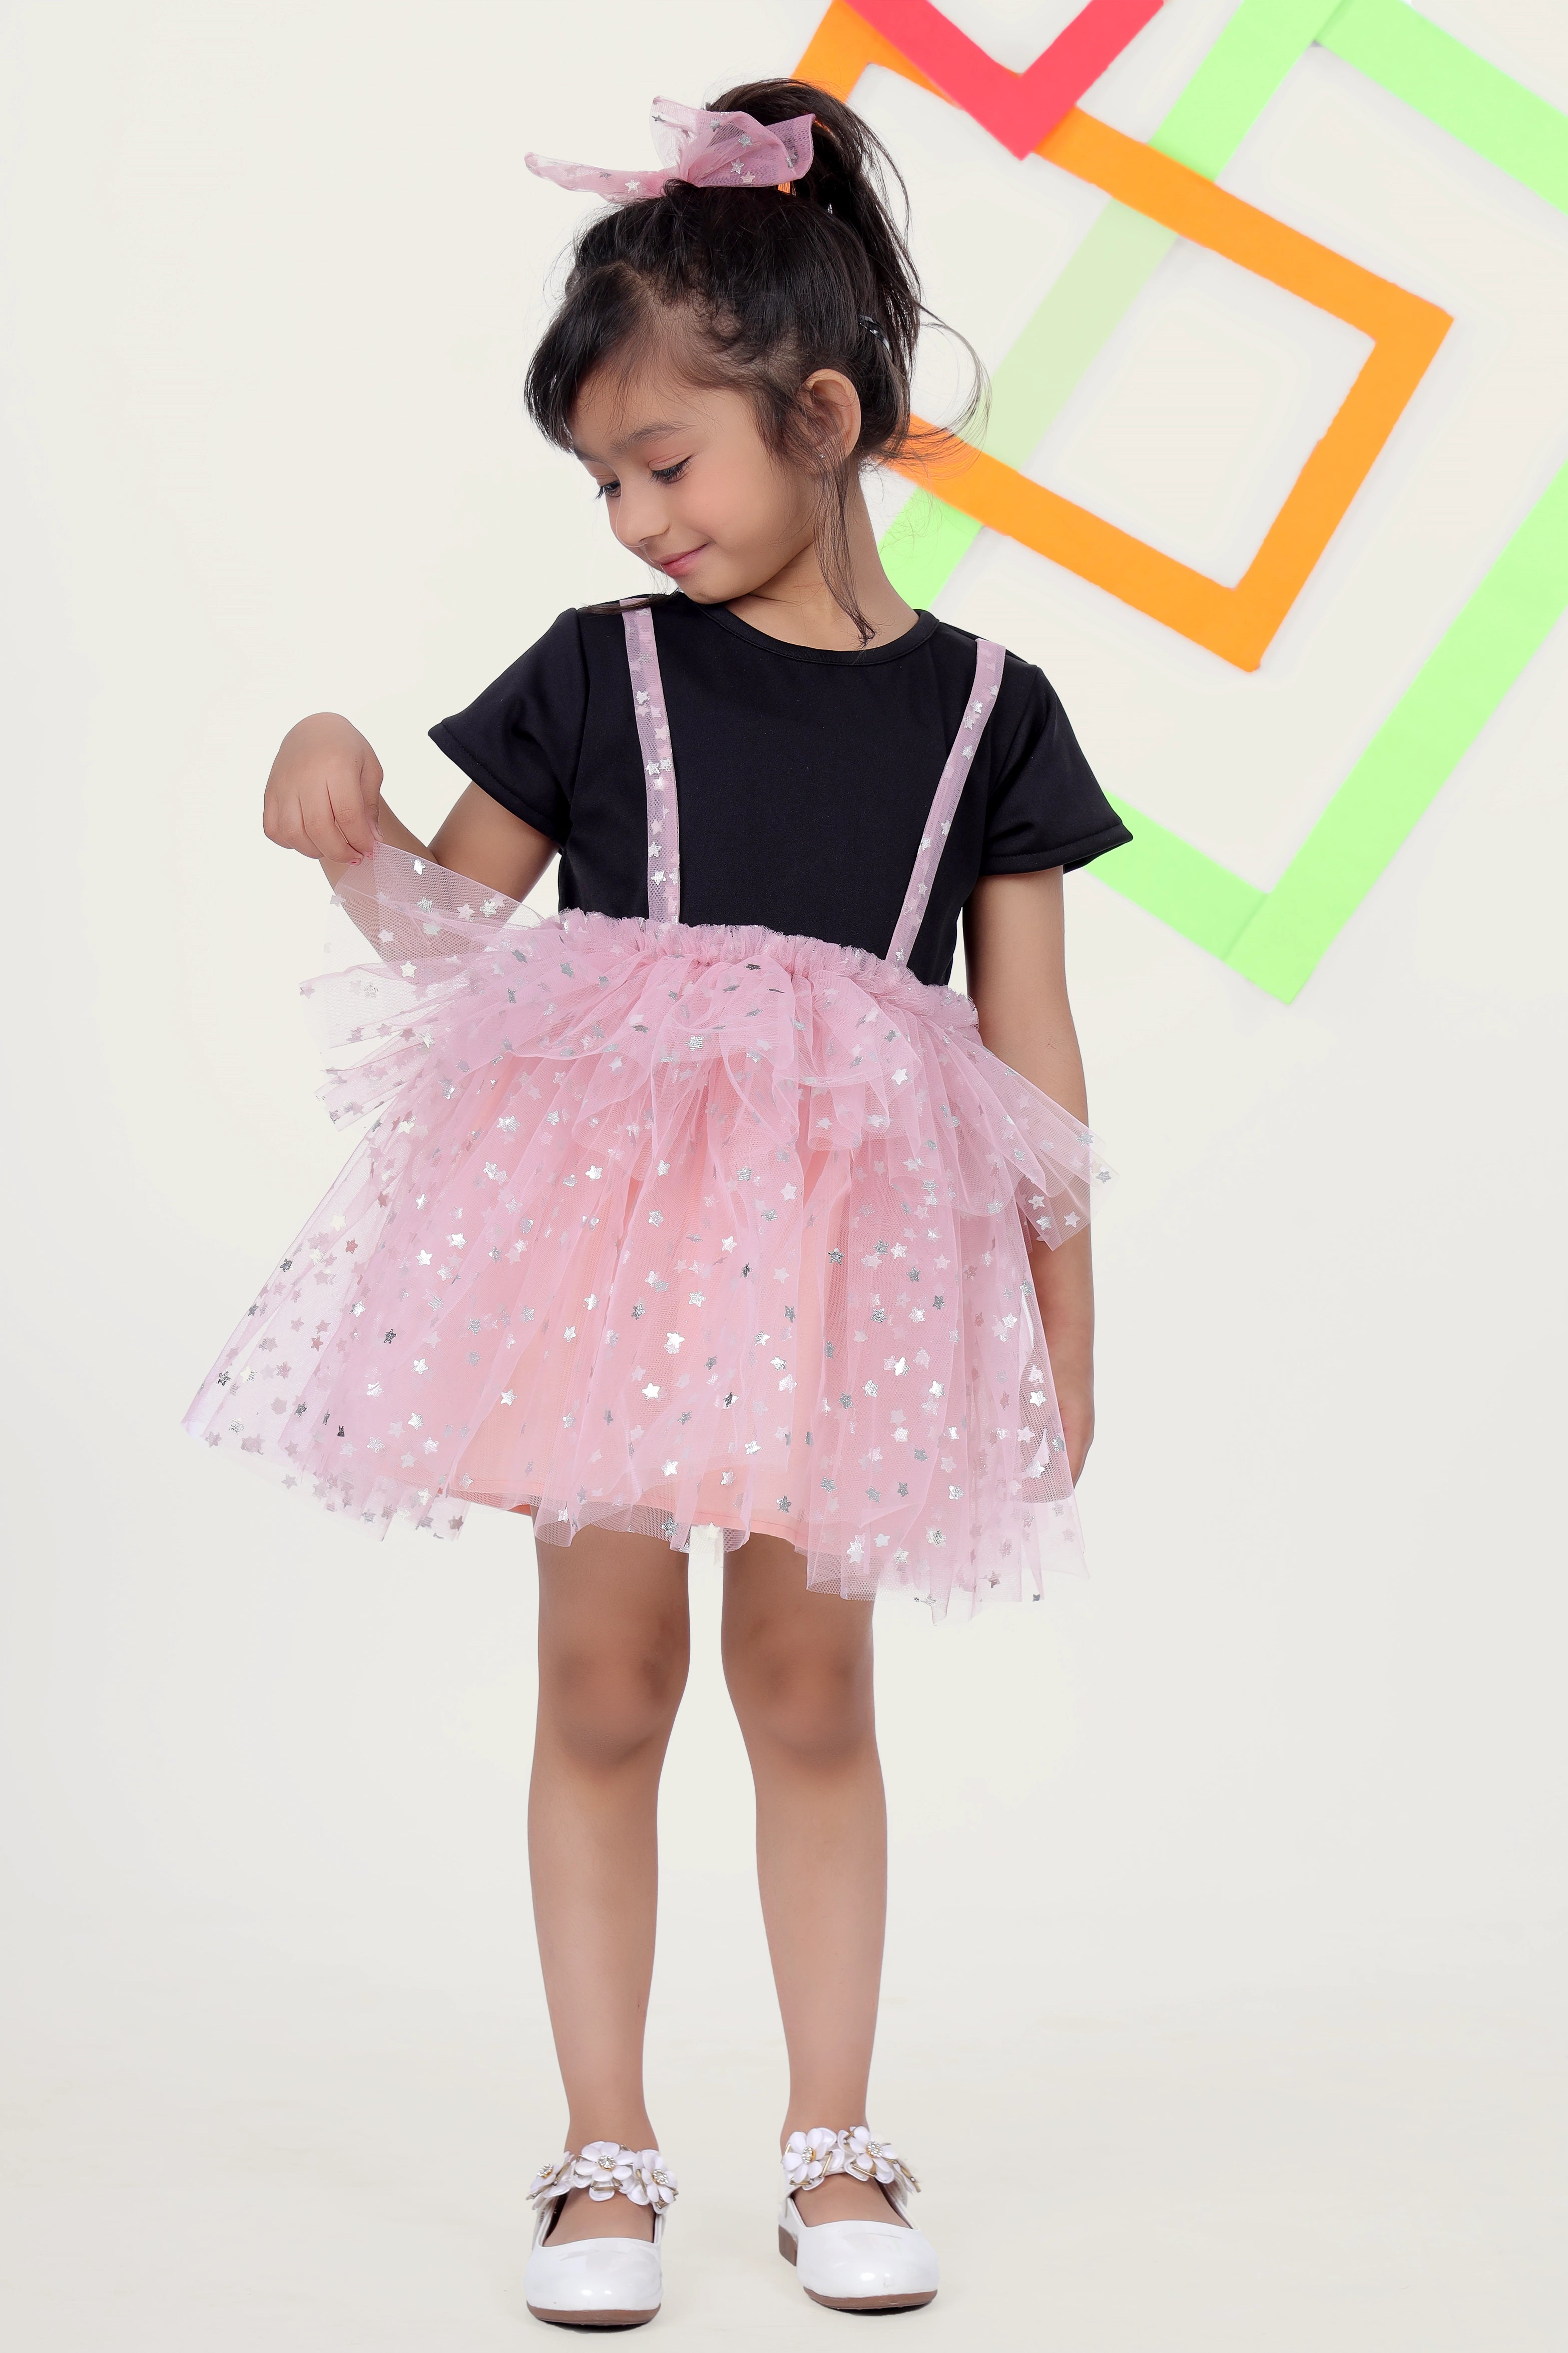 Sparkling Star Dress for Kids